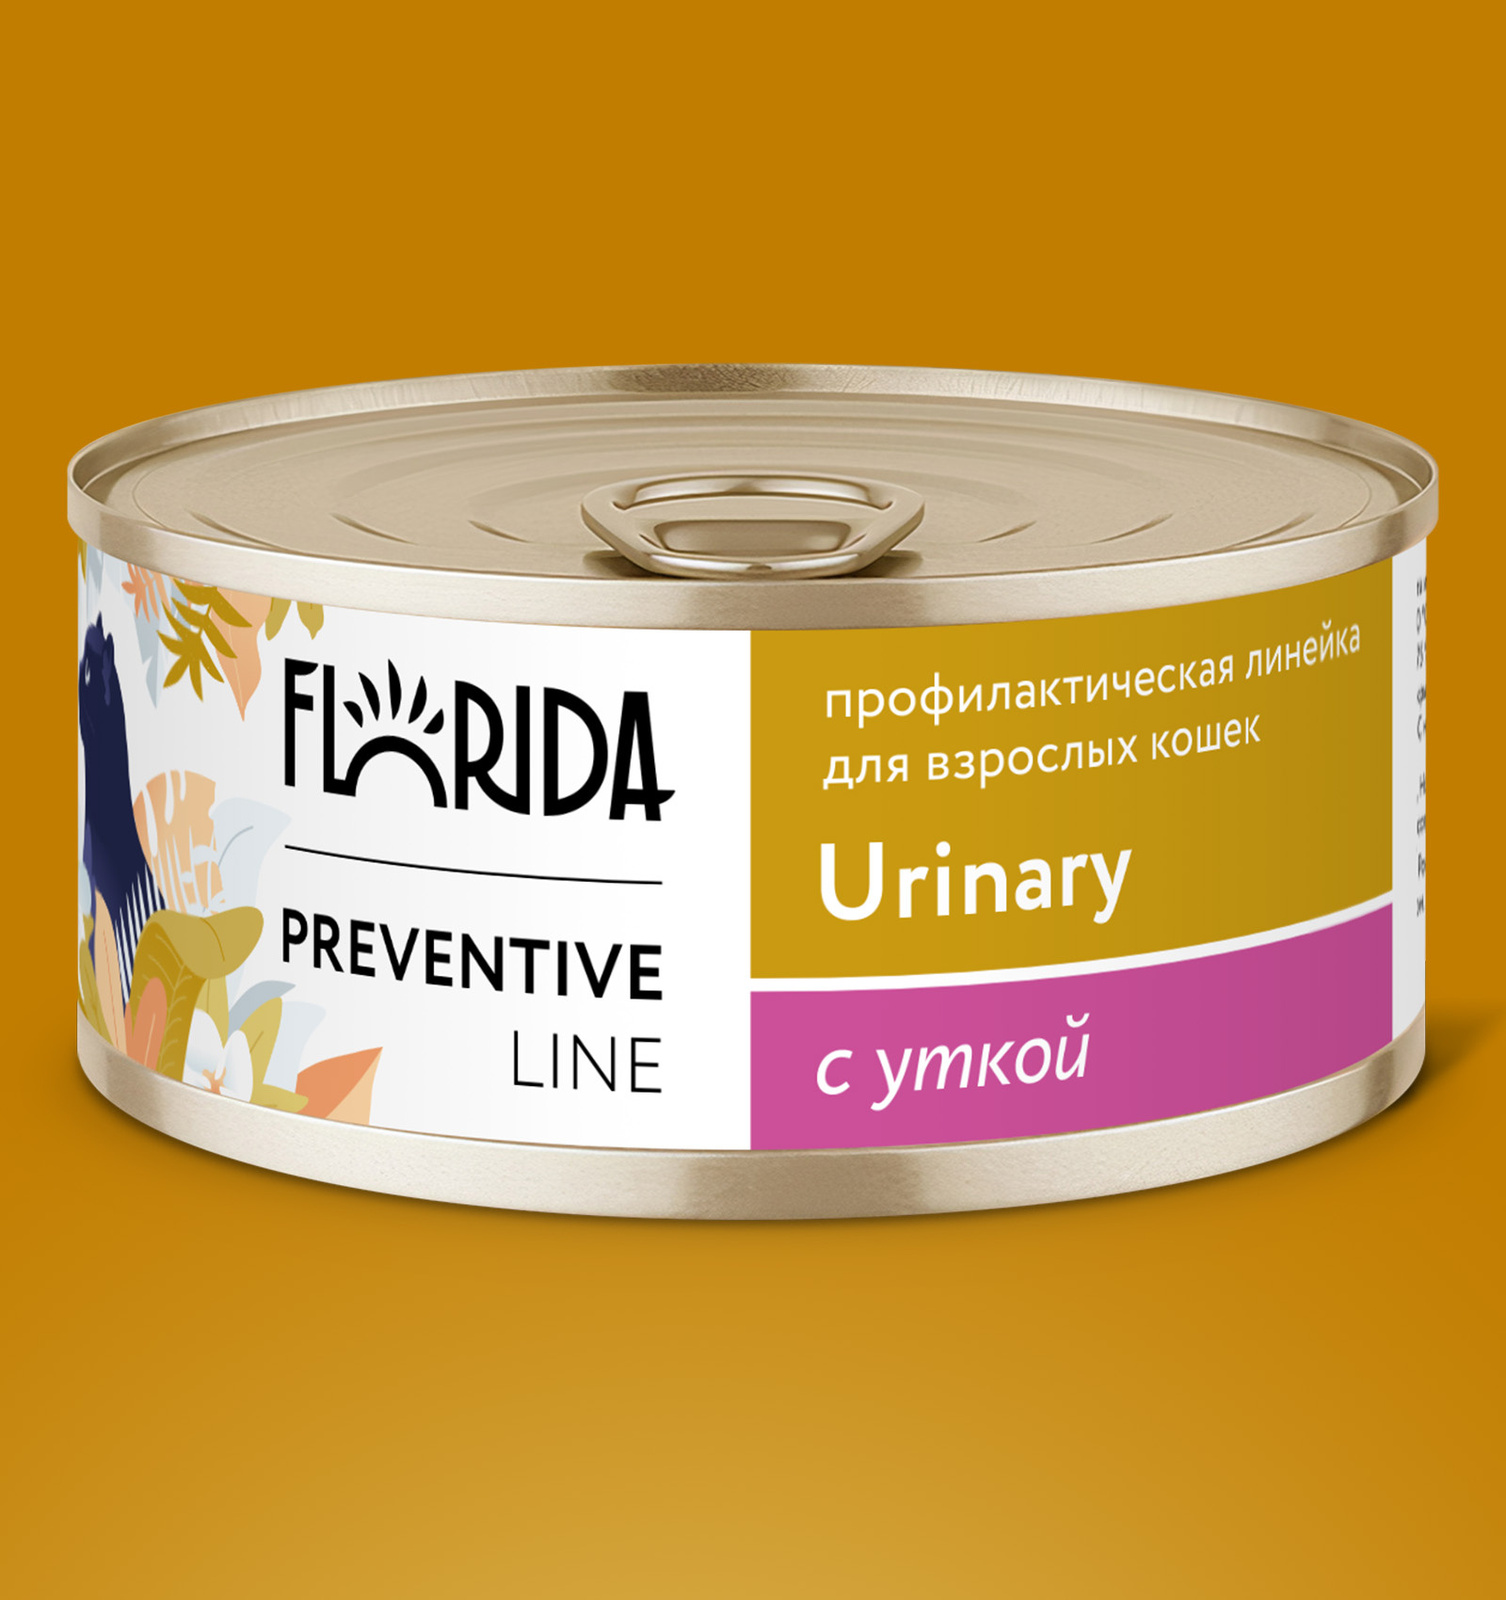 Florida Preventive Line консервы urinary для кошек. 